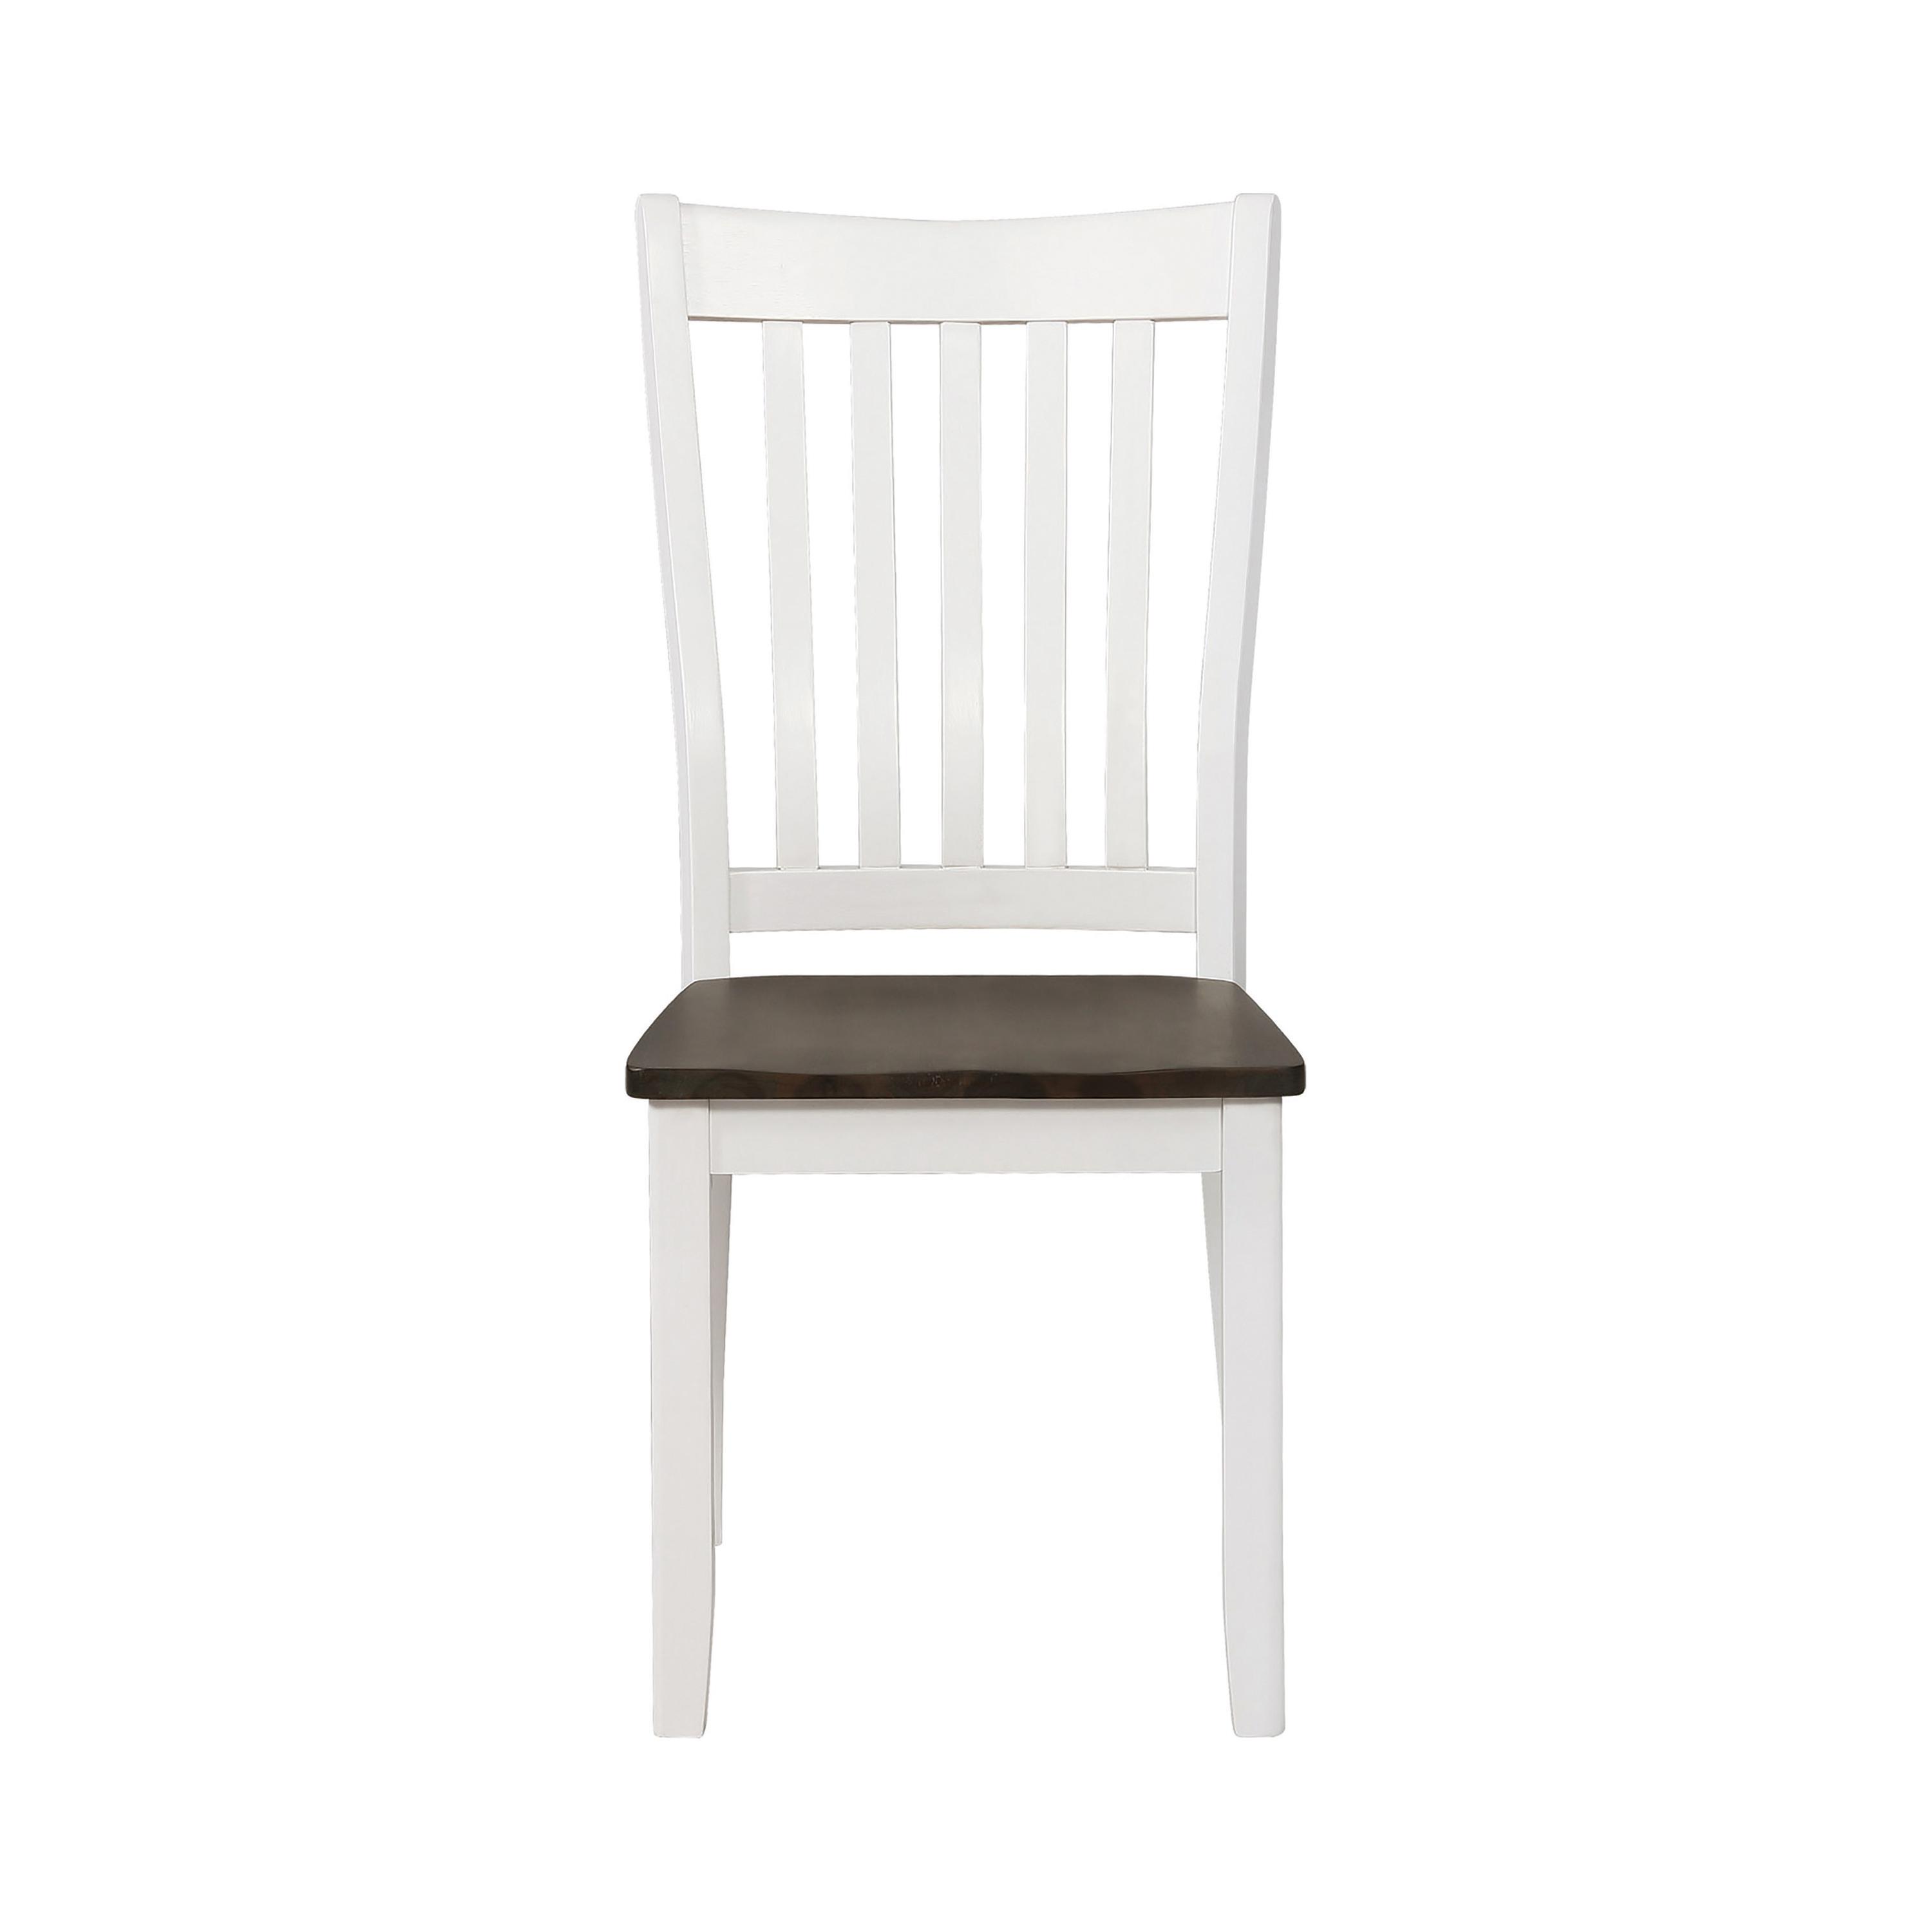 Cottage Side Chair Set 109542 Kingman 109542 in Espresso, White 